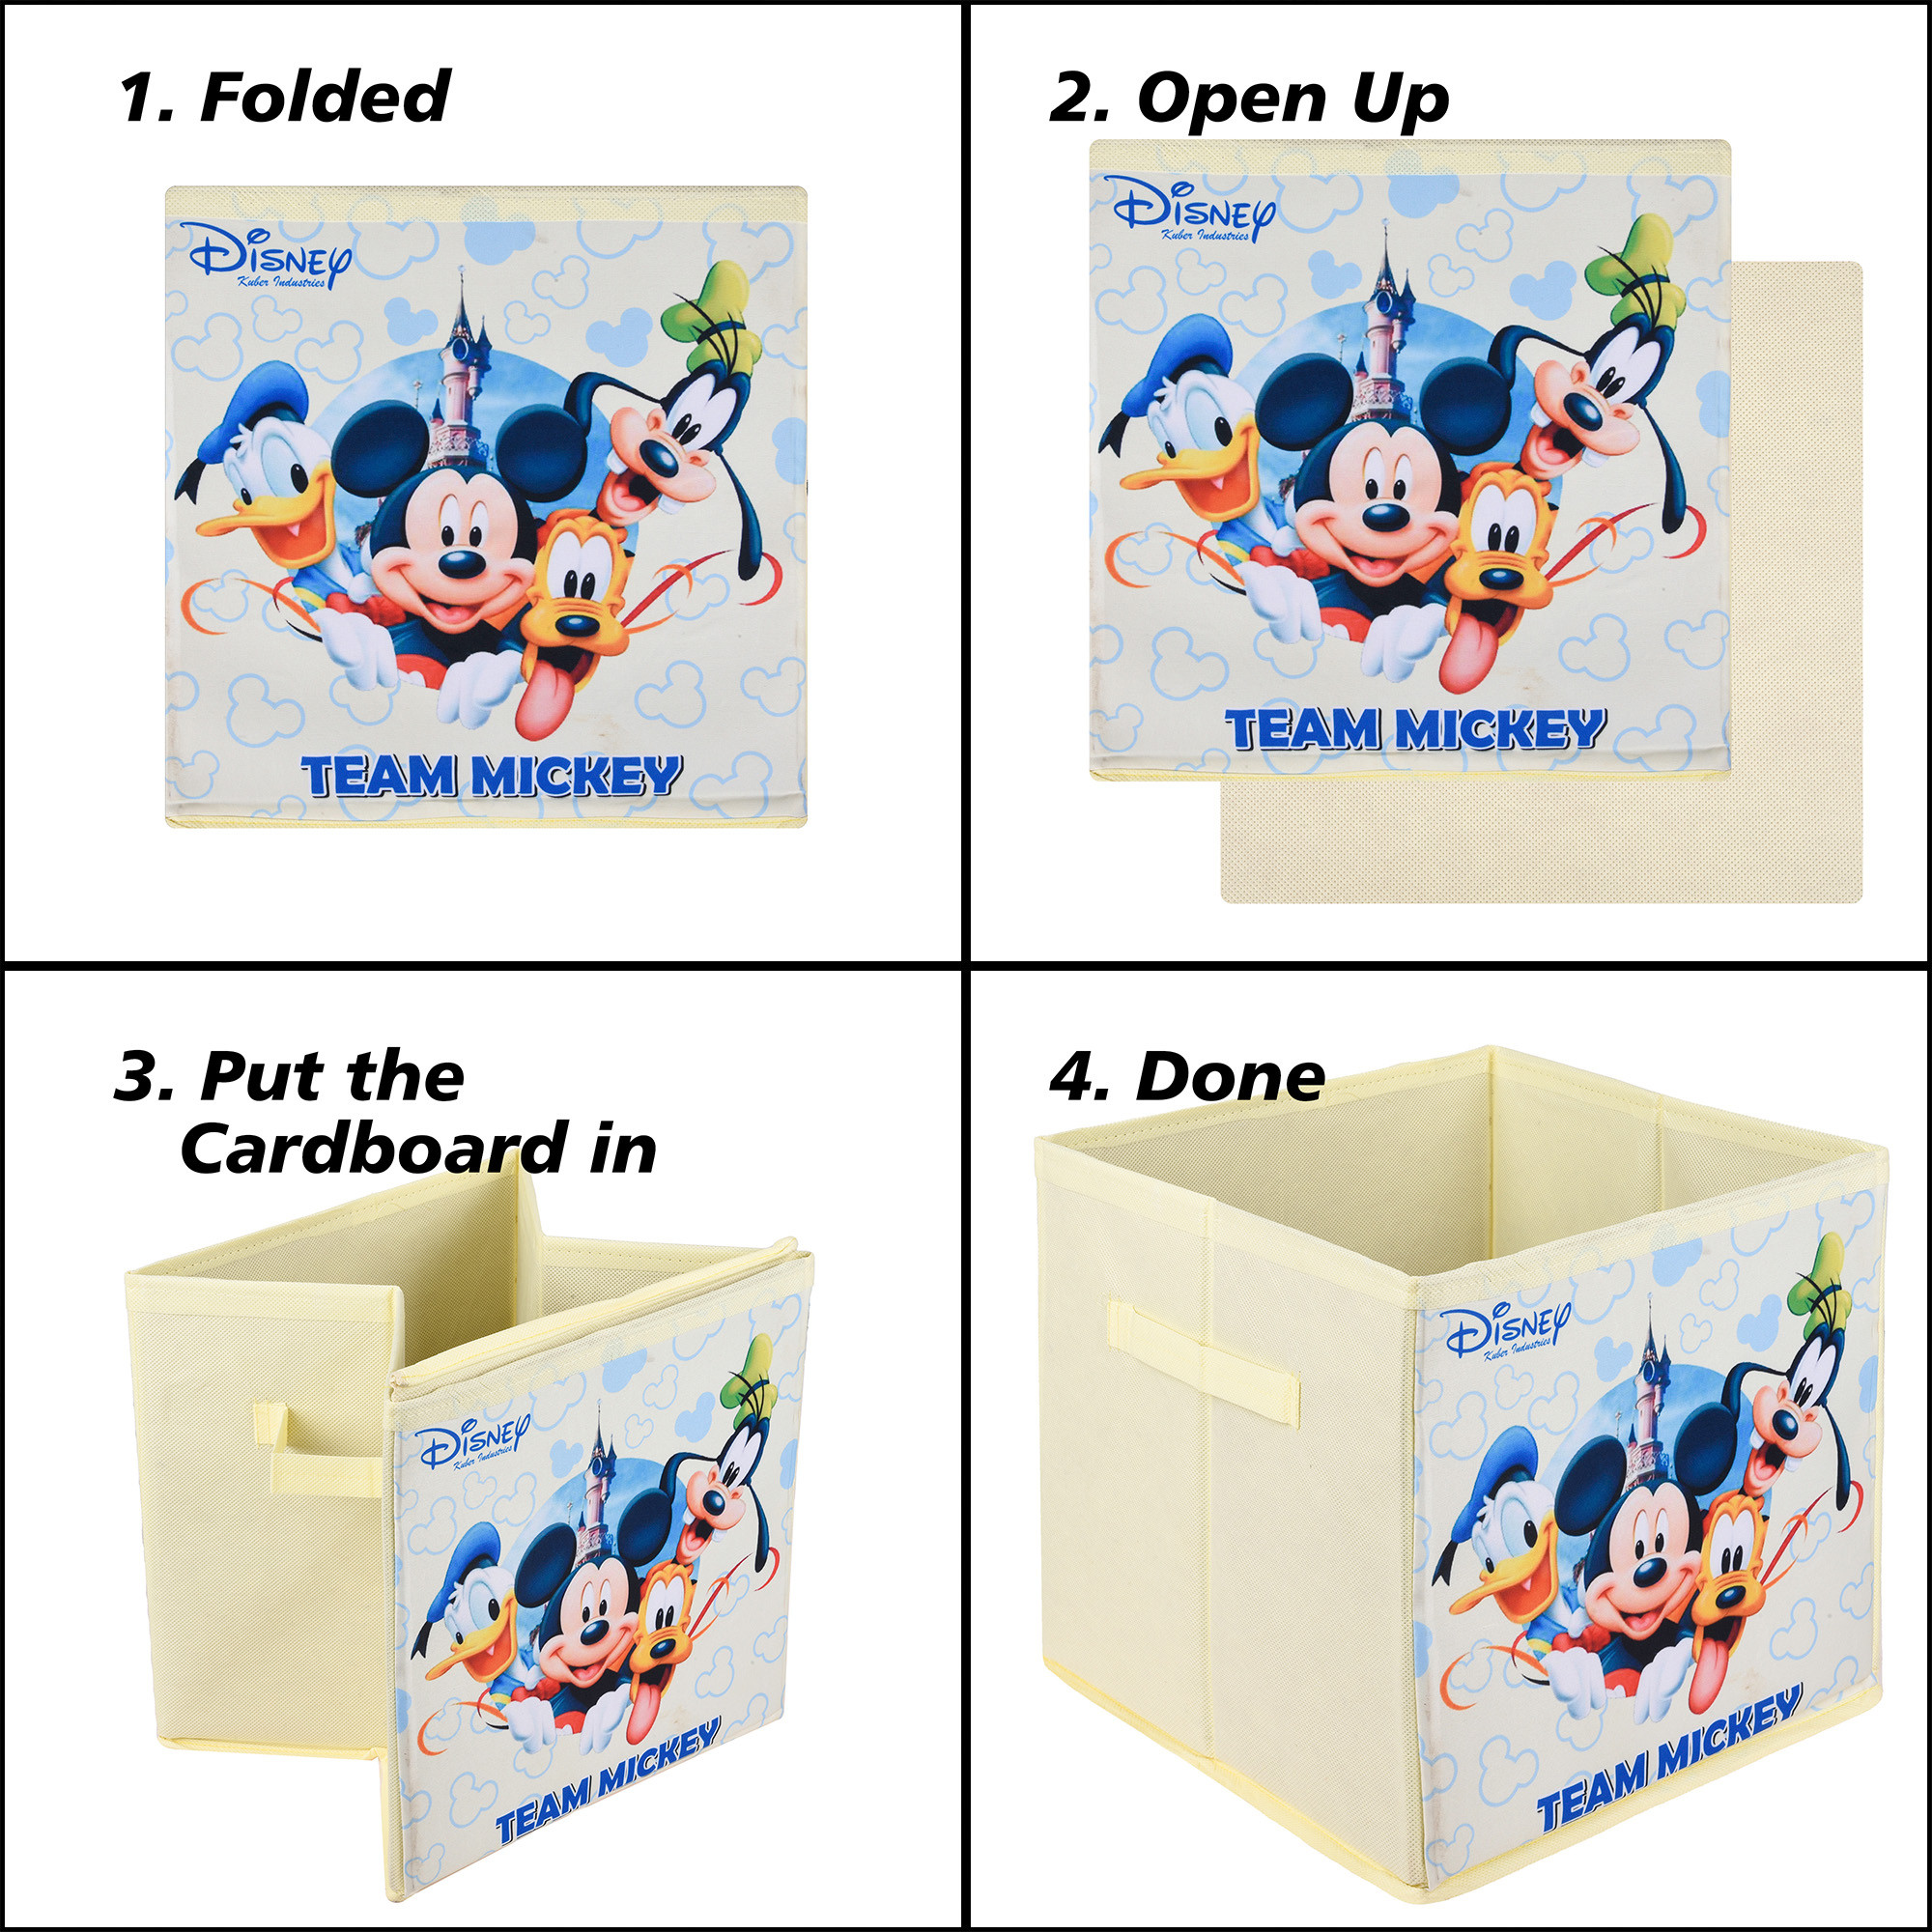 Kuber Industries Storage Box | Square Toy Storage Box | Wardrobe Organizer for Clothes-Books-Toys-Stationary | Drawer Organizer Box with Handle | Disney-Print | Pink & Cream